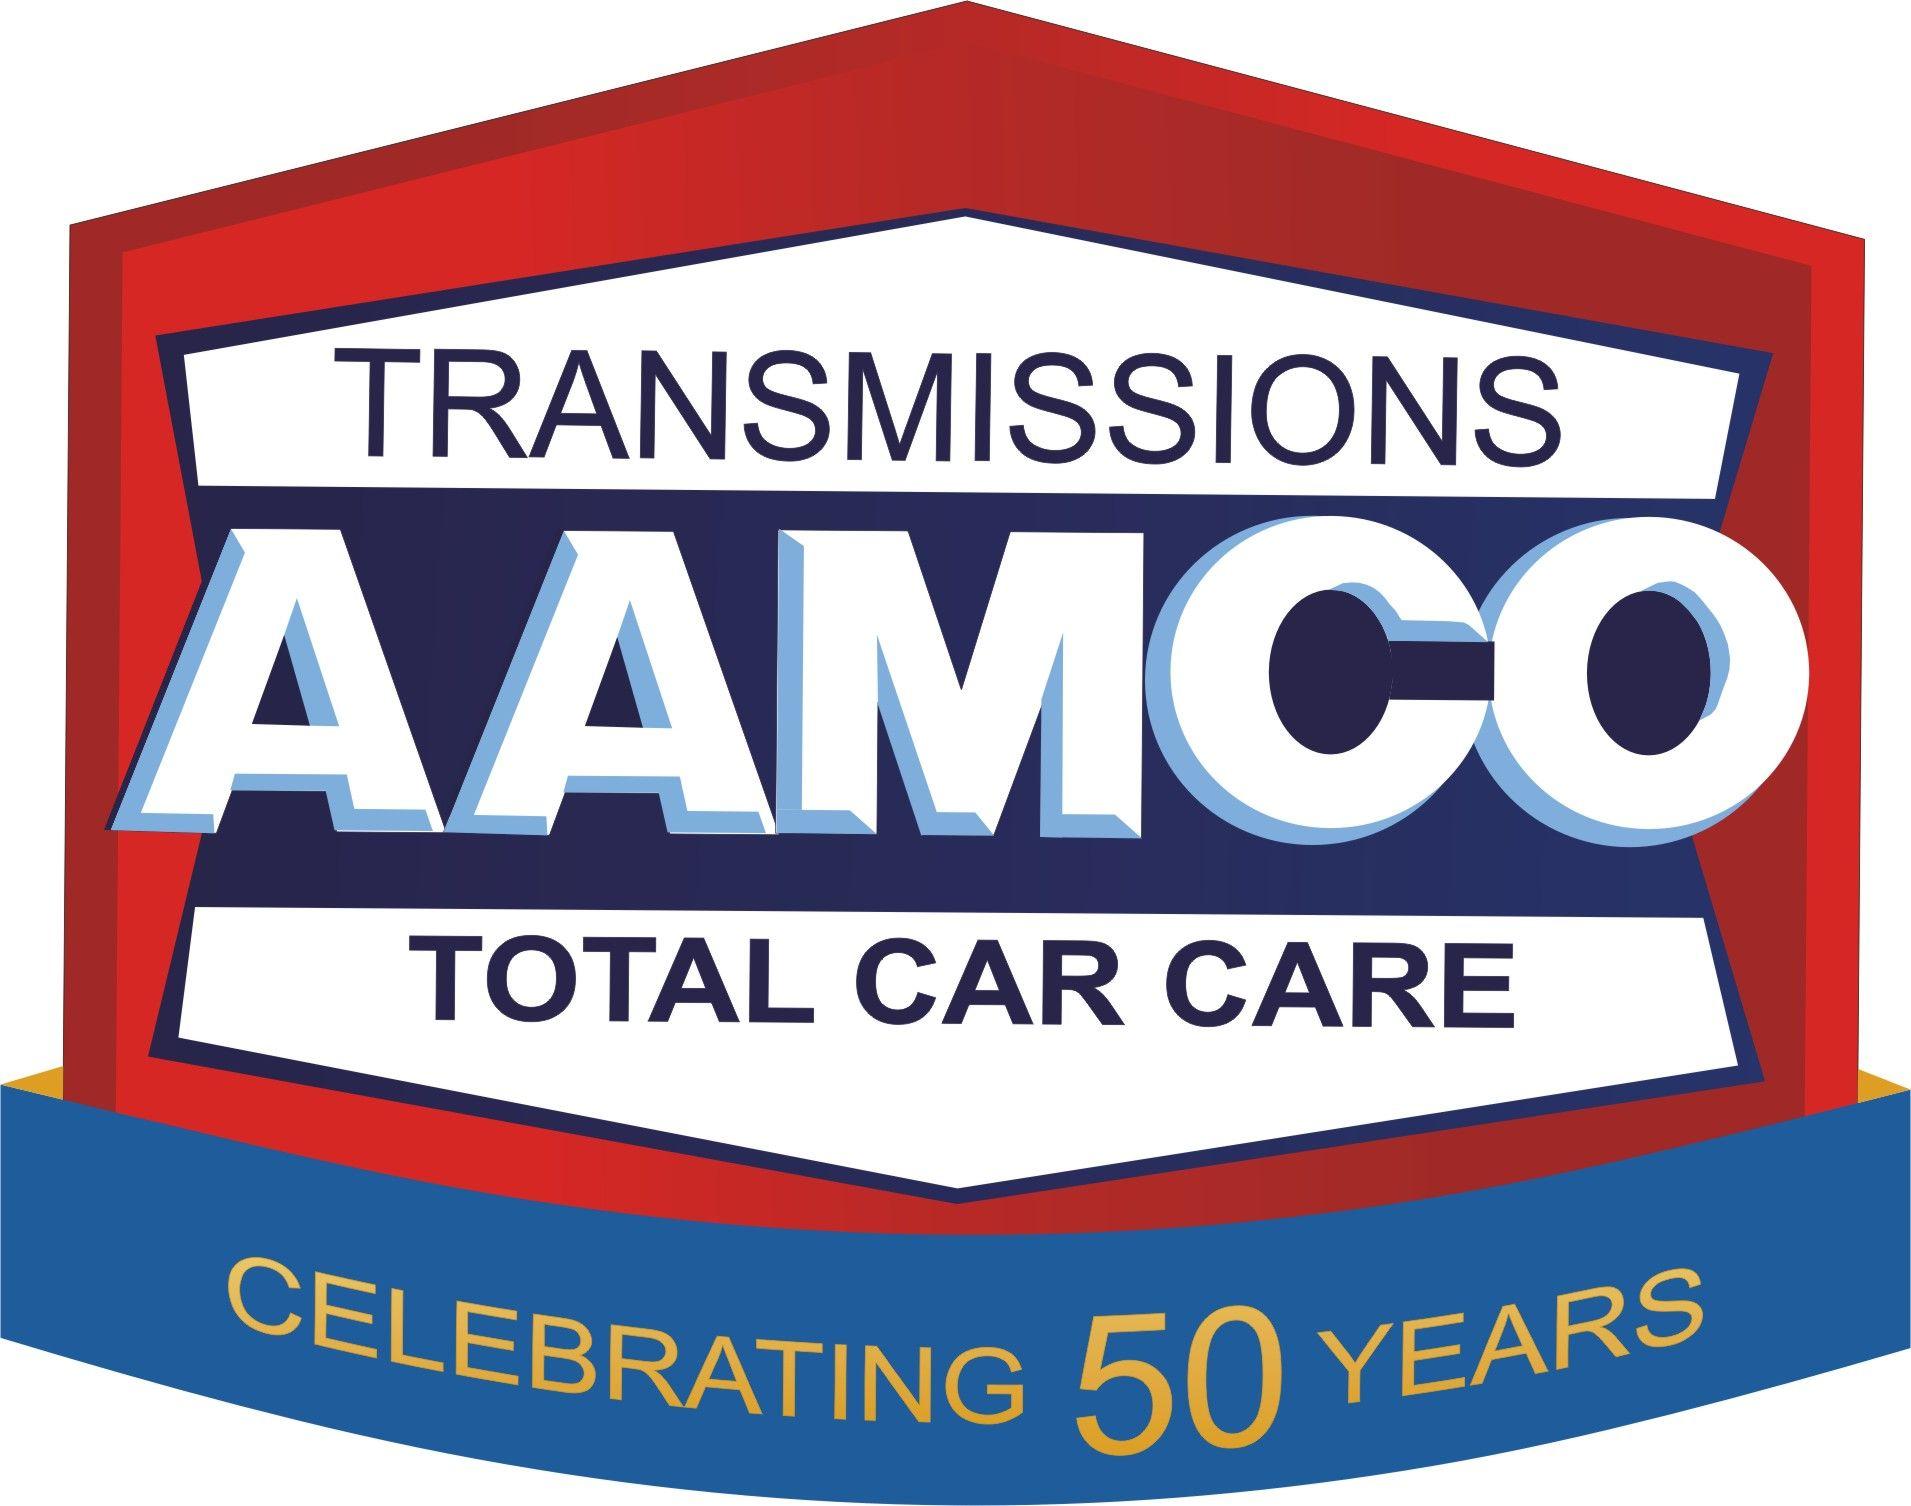 AAMCO Logo - Blog » Veteran Hiring Made Easy at Military Job Networks